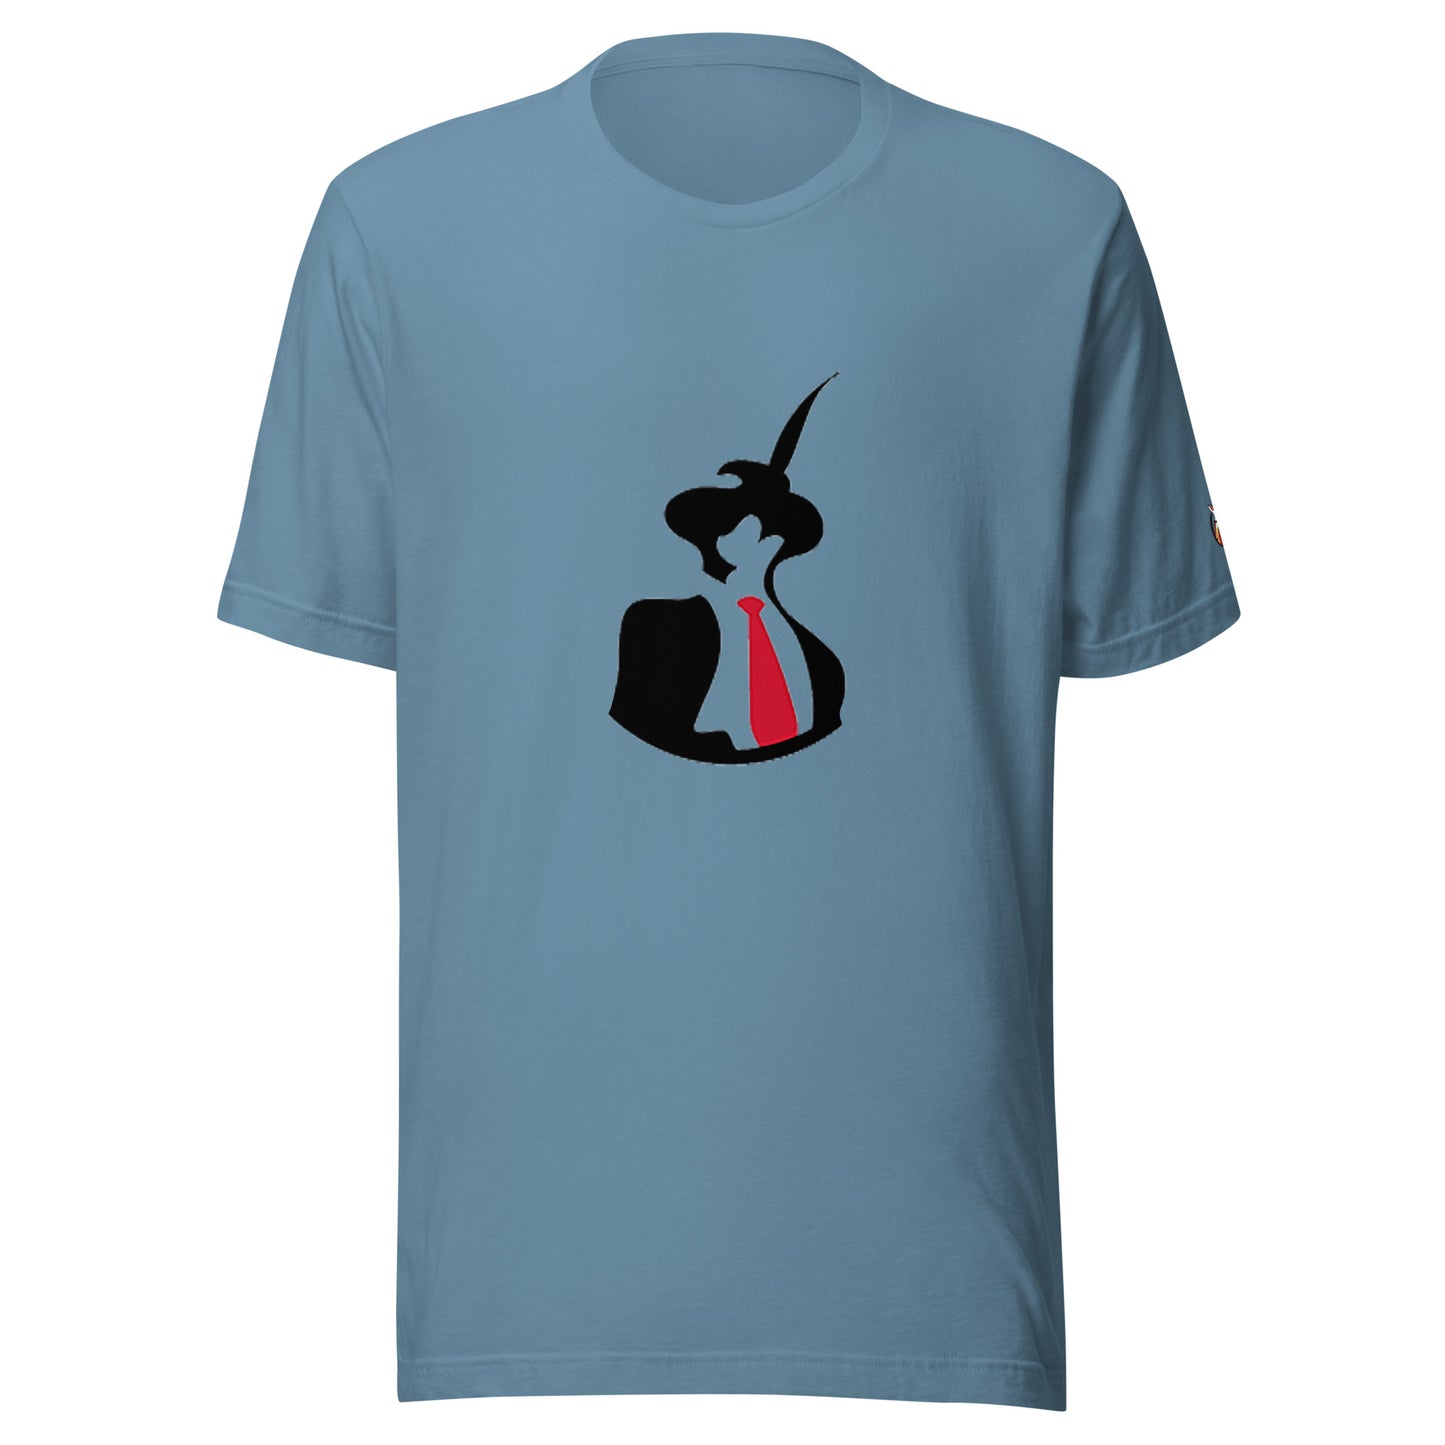 Snooty Fox Art Unisex T-shirt - Zoot Suit